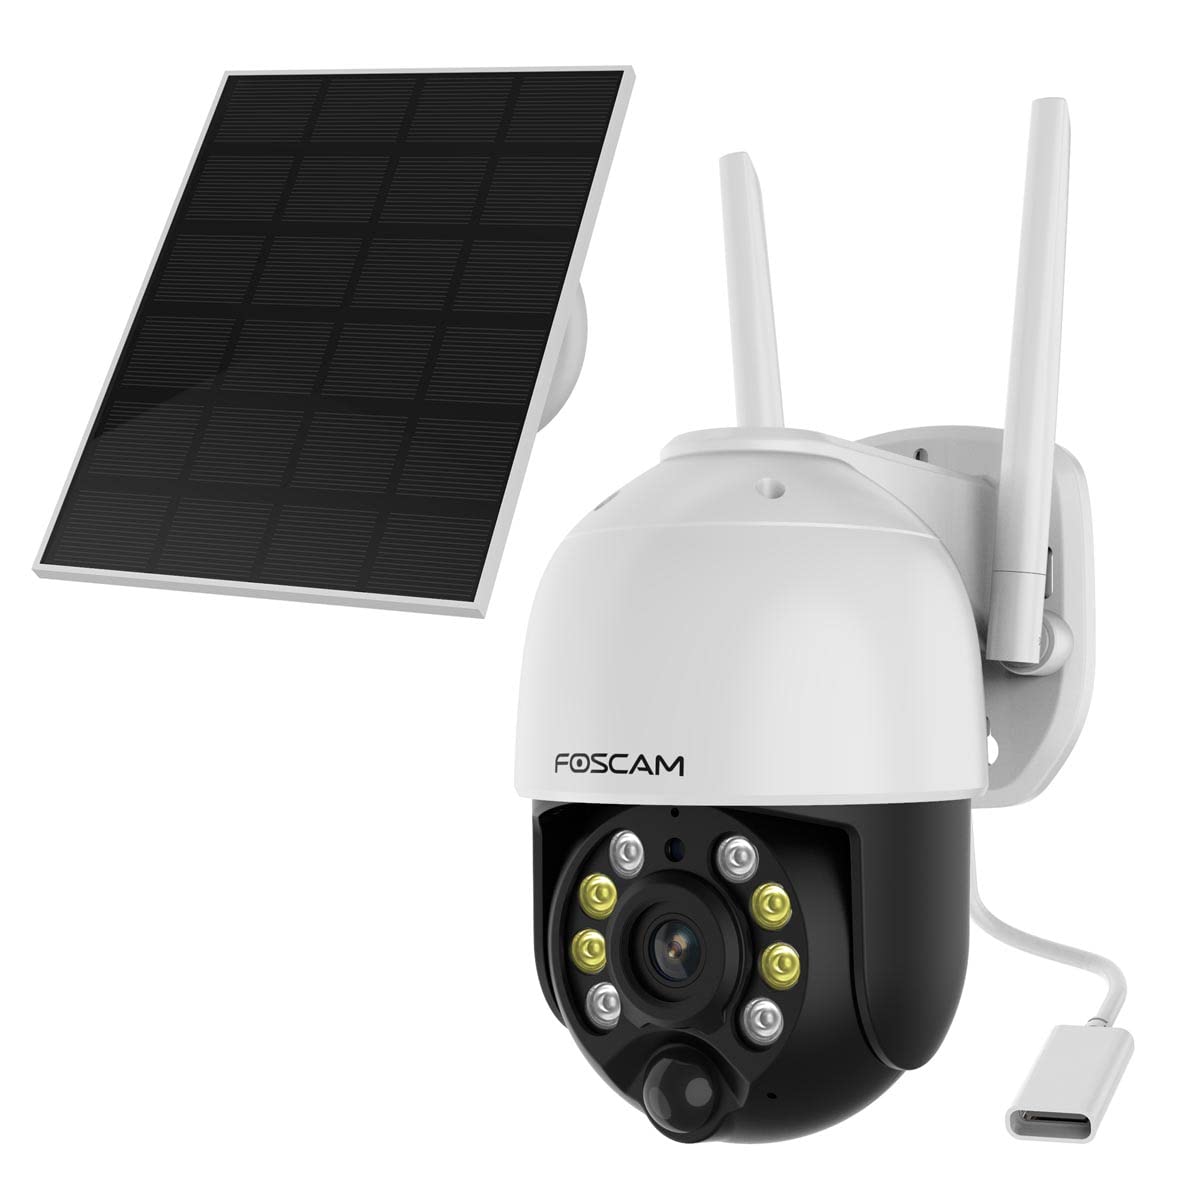 Foscam B4 WLAN IP Überwachungskamera 2560 x 1440 Pixel, 5 V, Multicolor